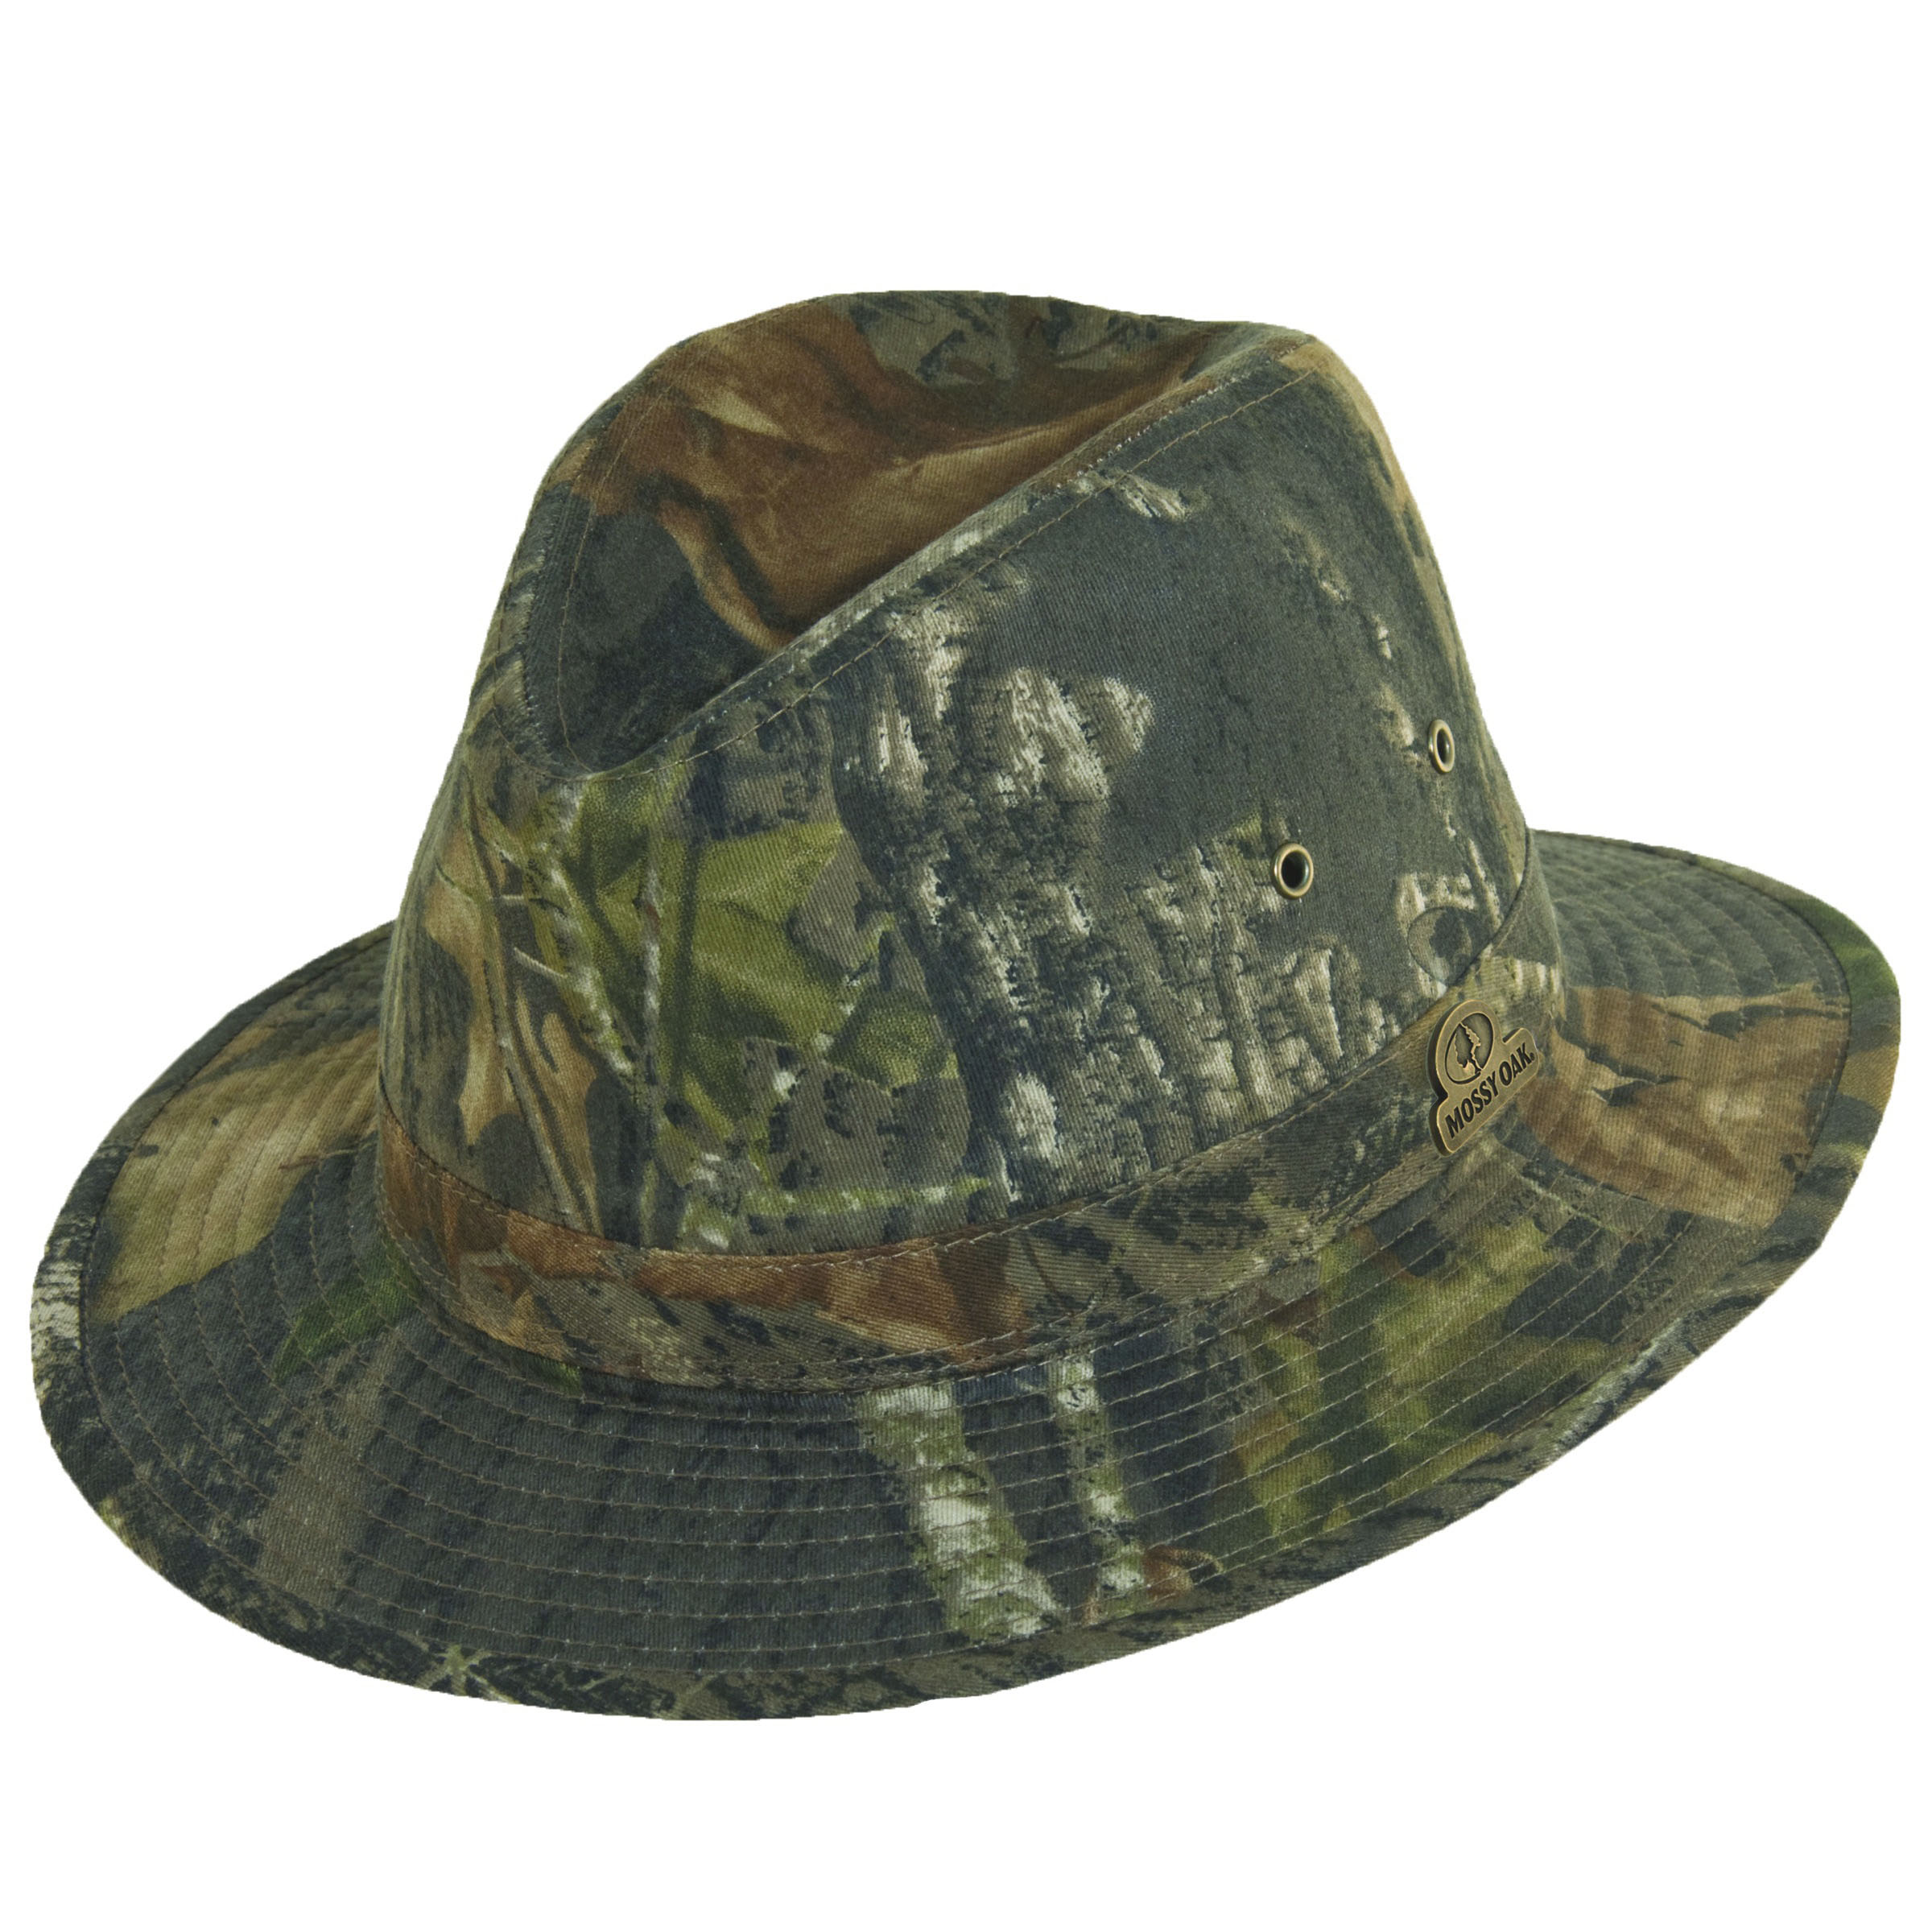 Mossy Oak Safari Hat